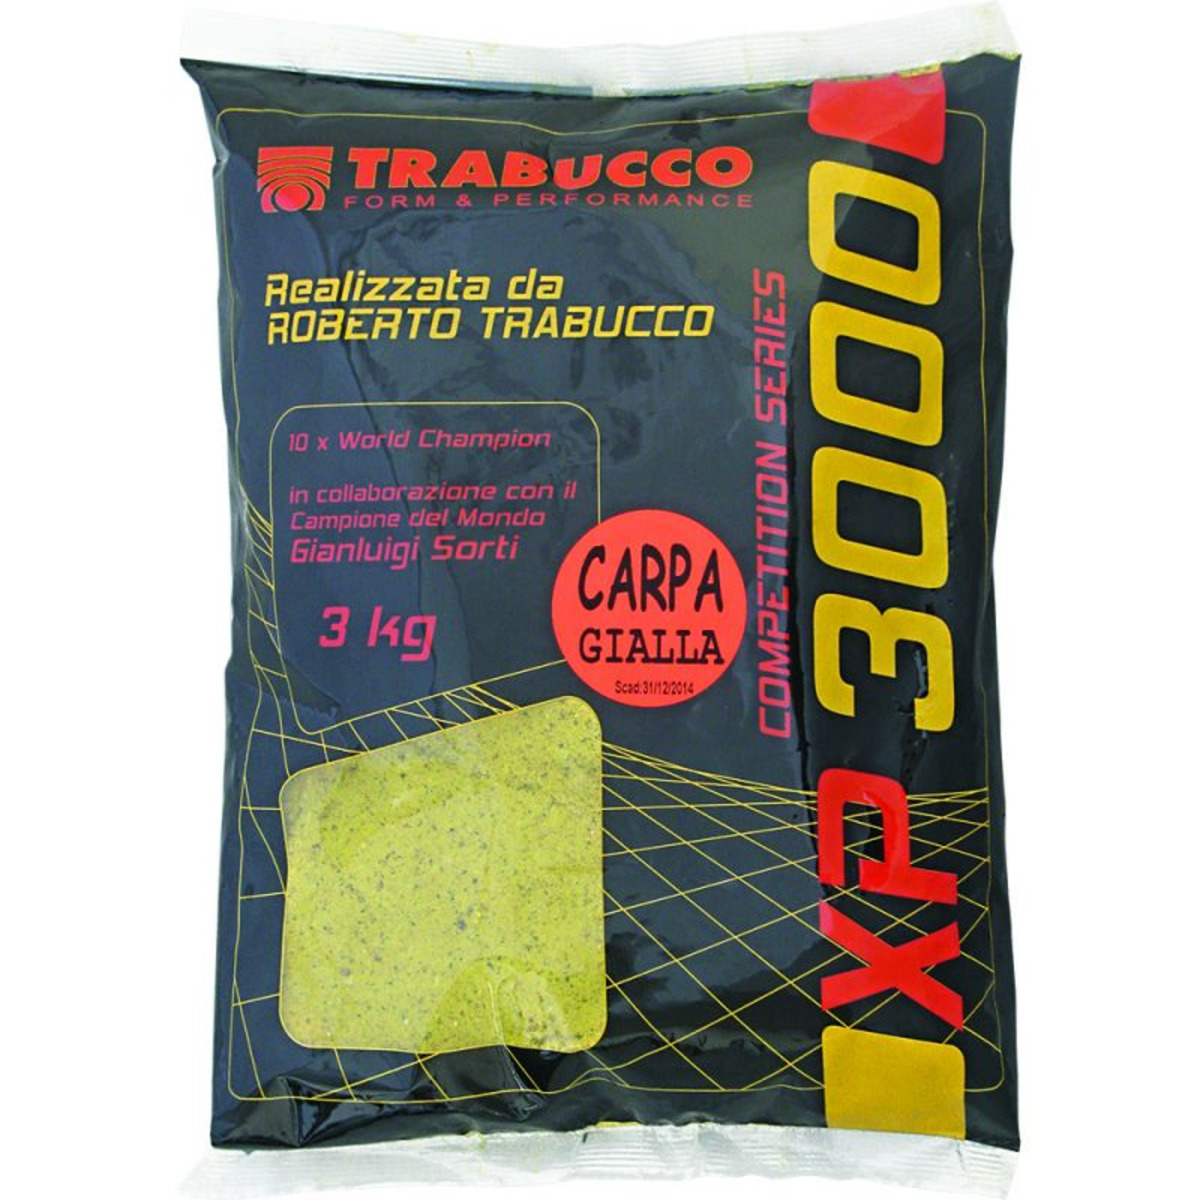 Trabucco Pastura XP 3000 - 3 Kg - Carpa Rossa         